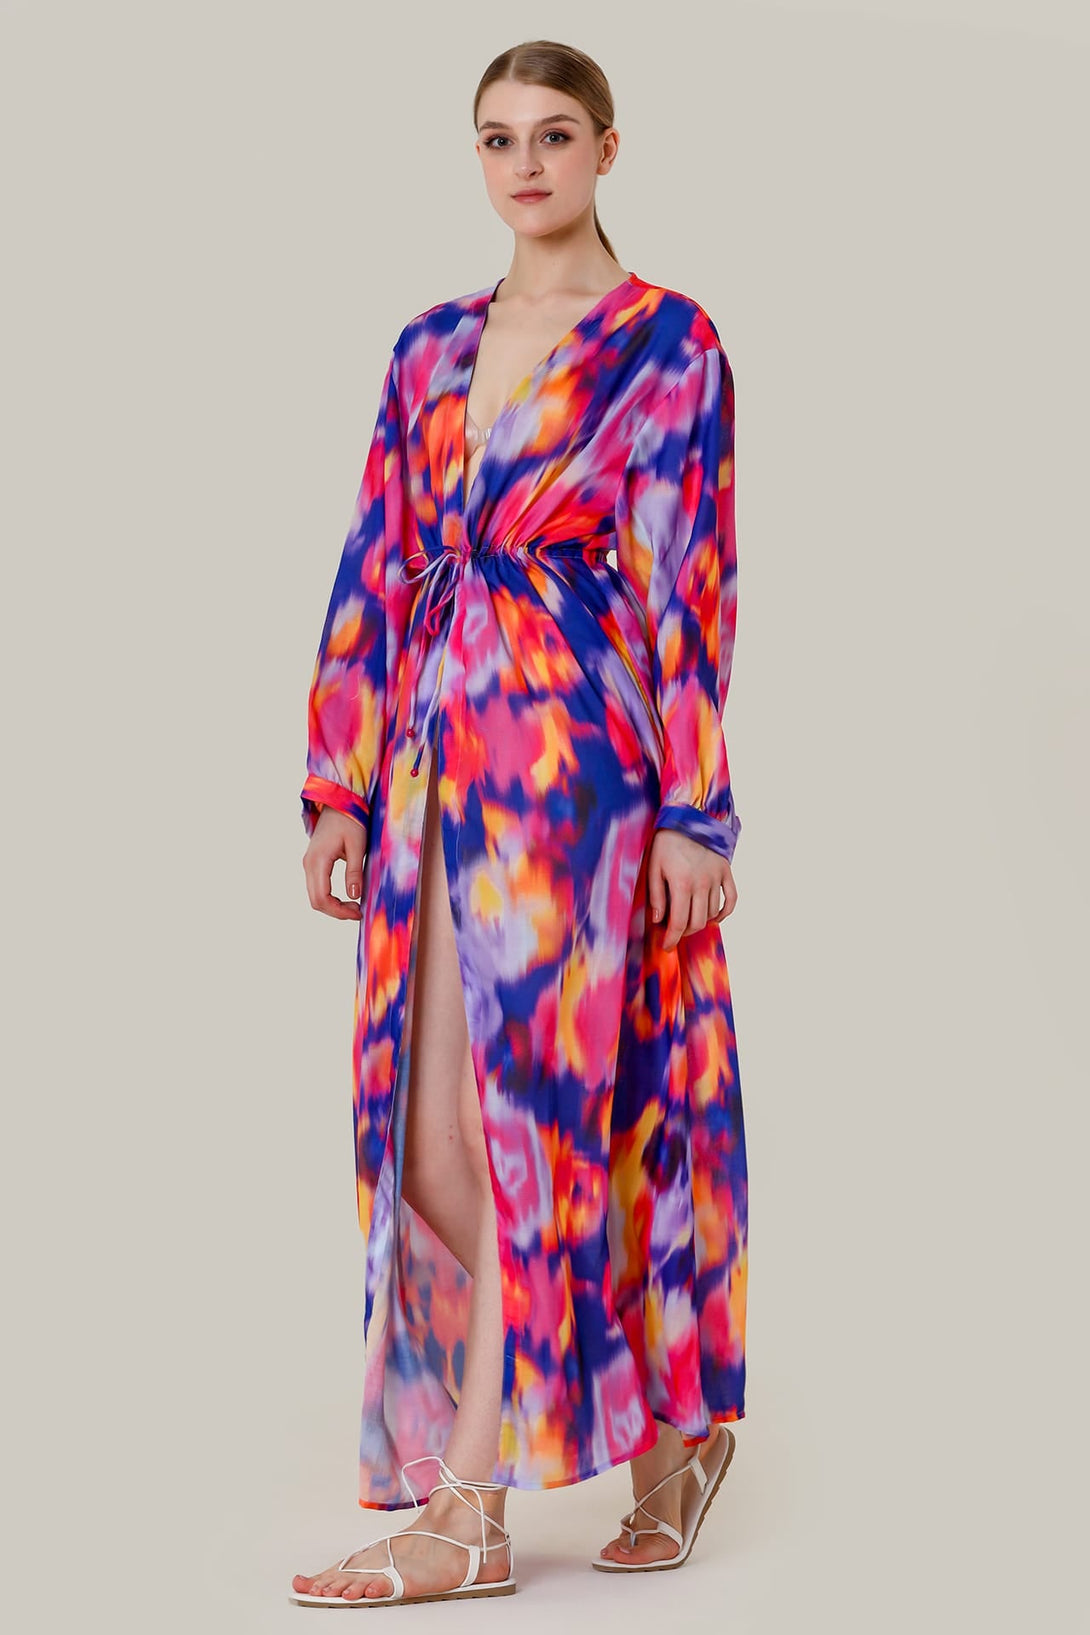 "plus size maxi dresses" "summer maxi dresses for women" "purple maxi dress long sleeve"